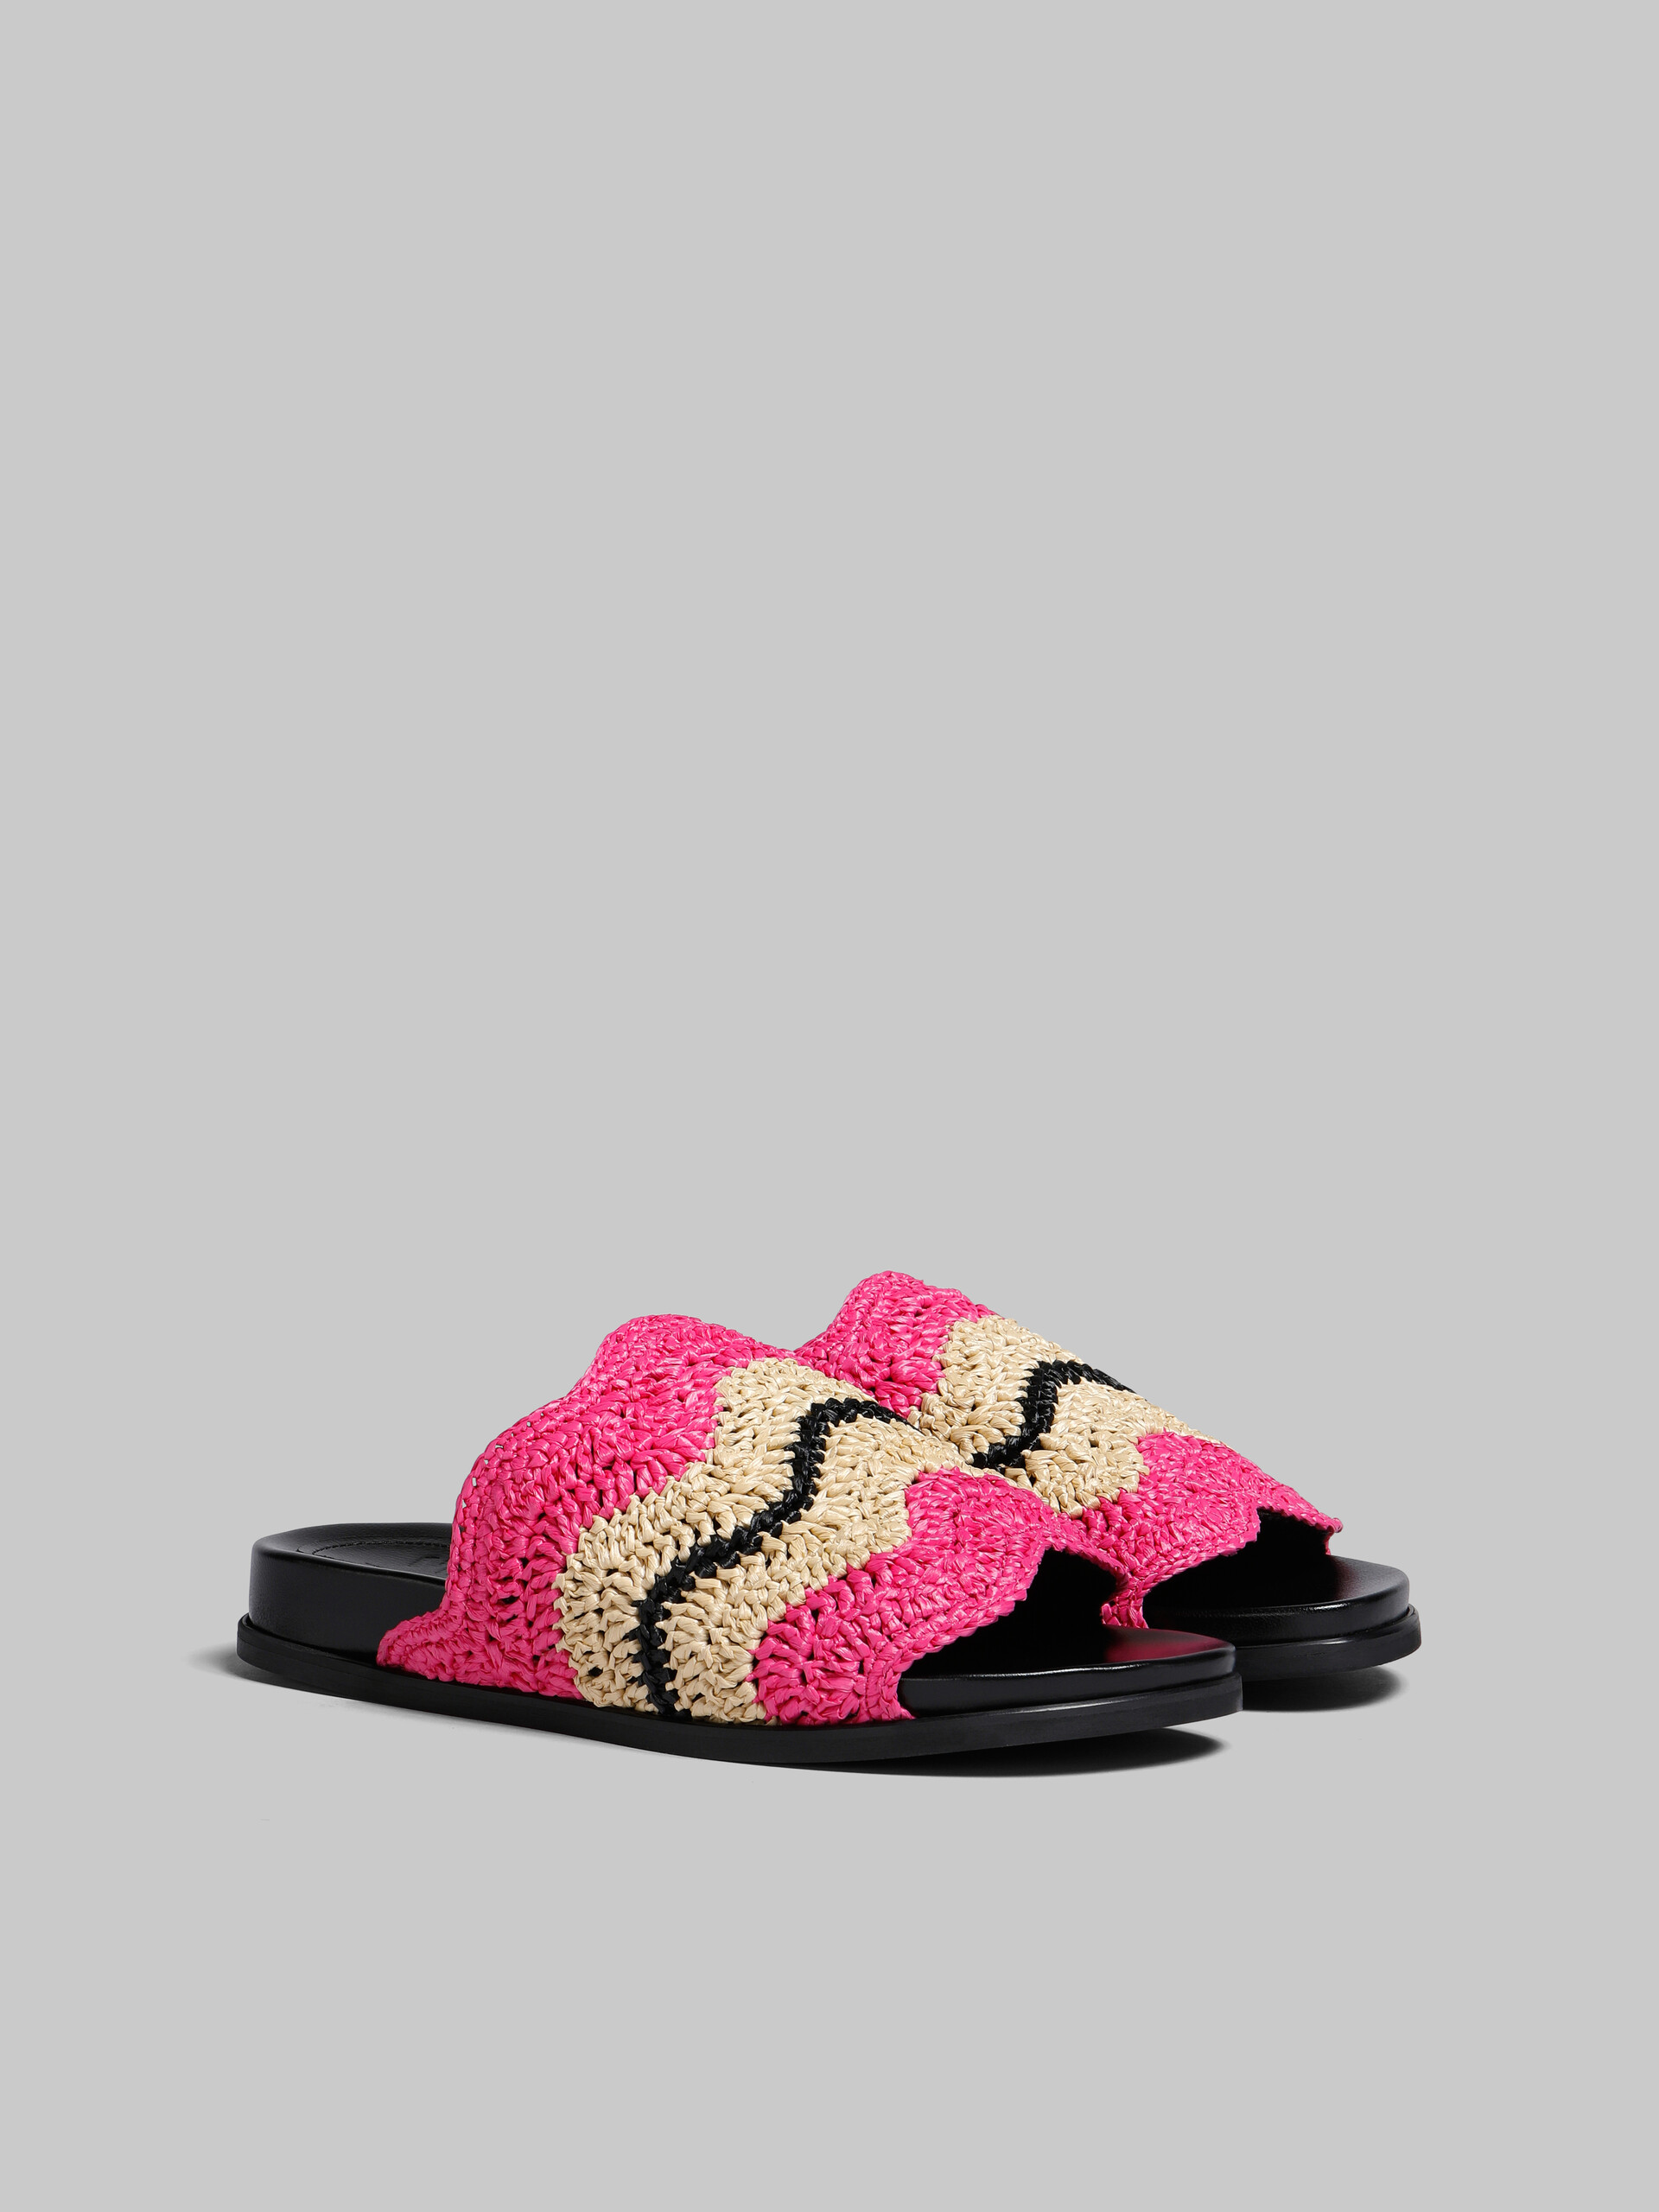 Marni x No Vacancy Inn - Fuchsia crochet raffia slide - Sandals - Image 2